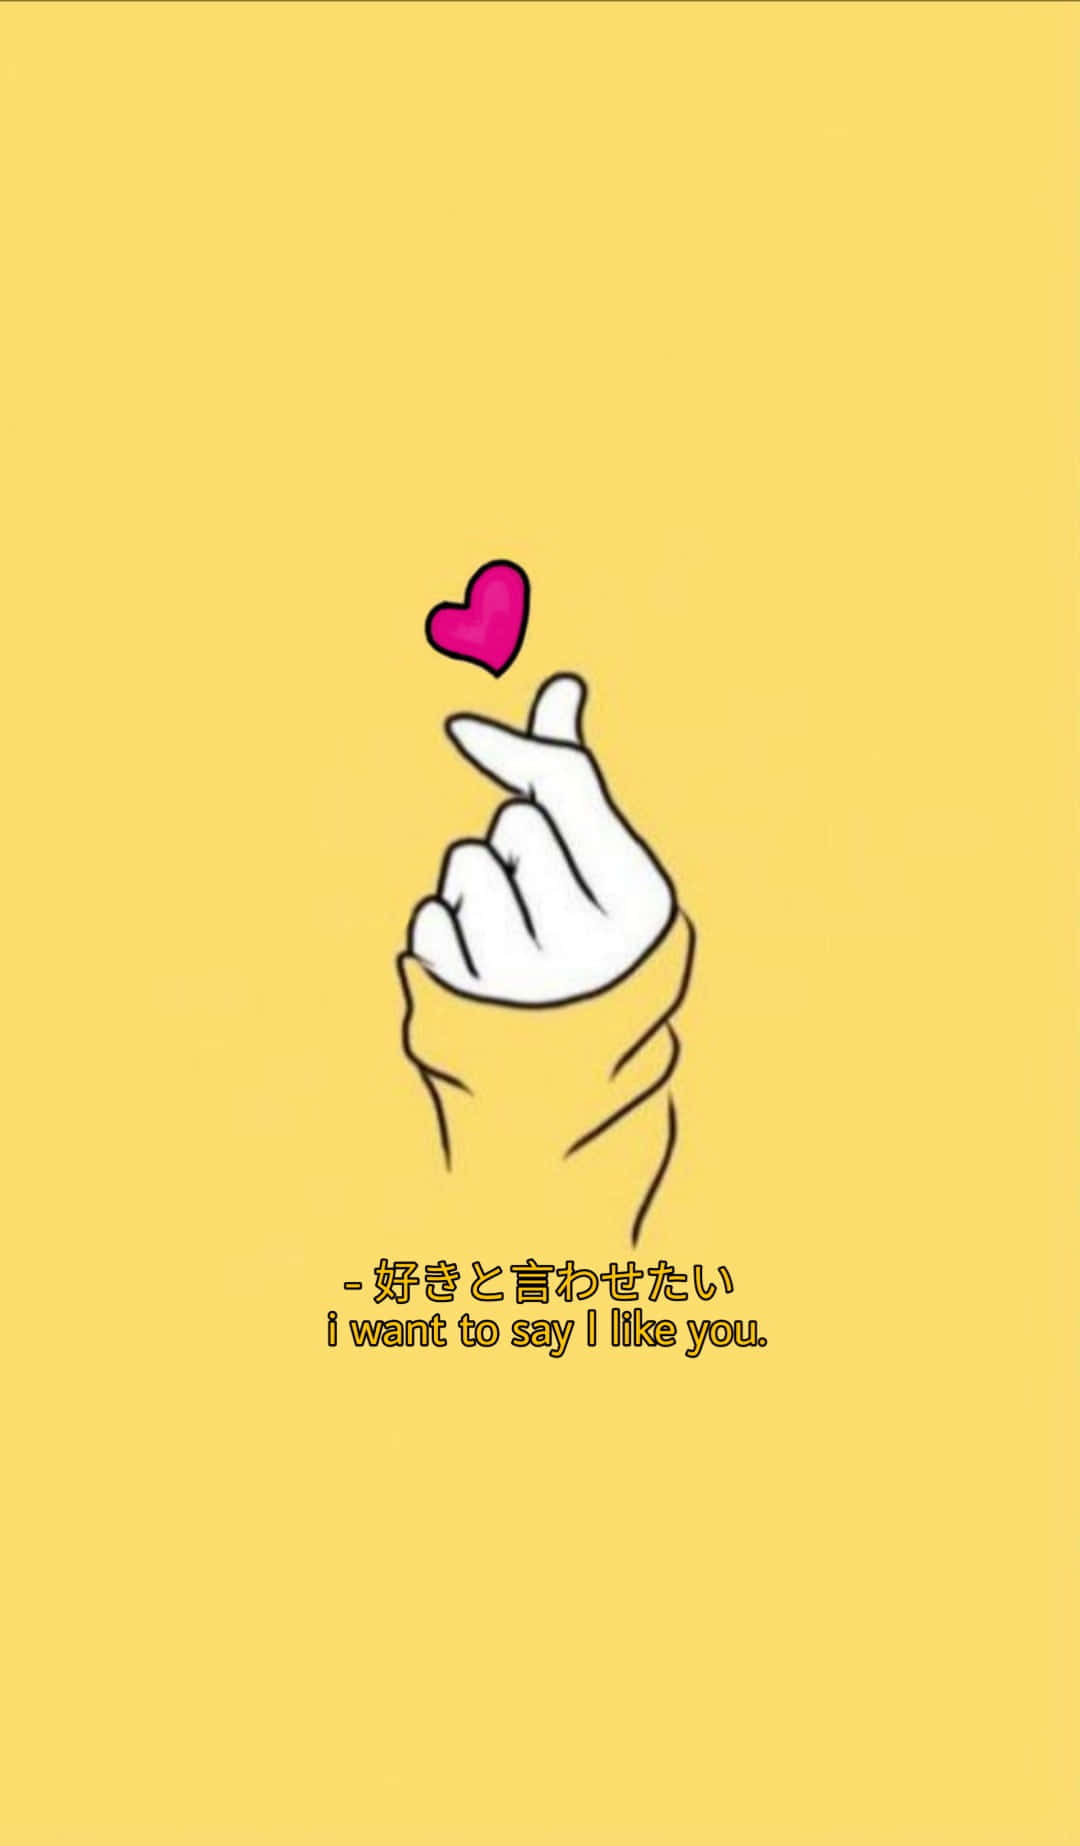 Korean Finger Heart Gesture Love Statement Wallpaper